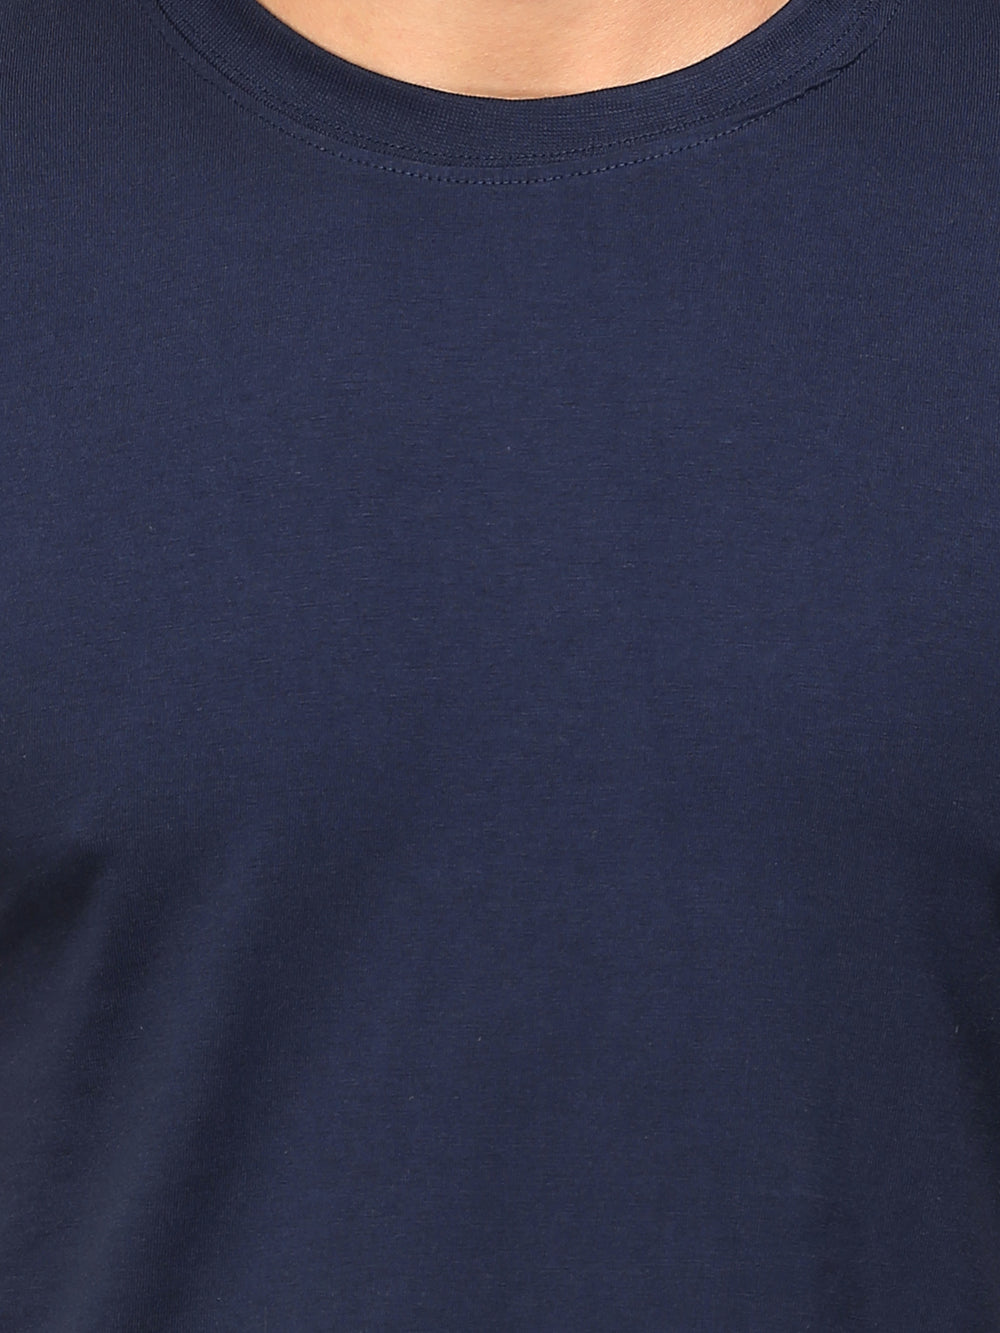 Solids : Premium Navy Blue Unisex T -shirt